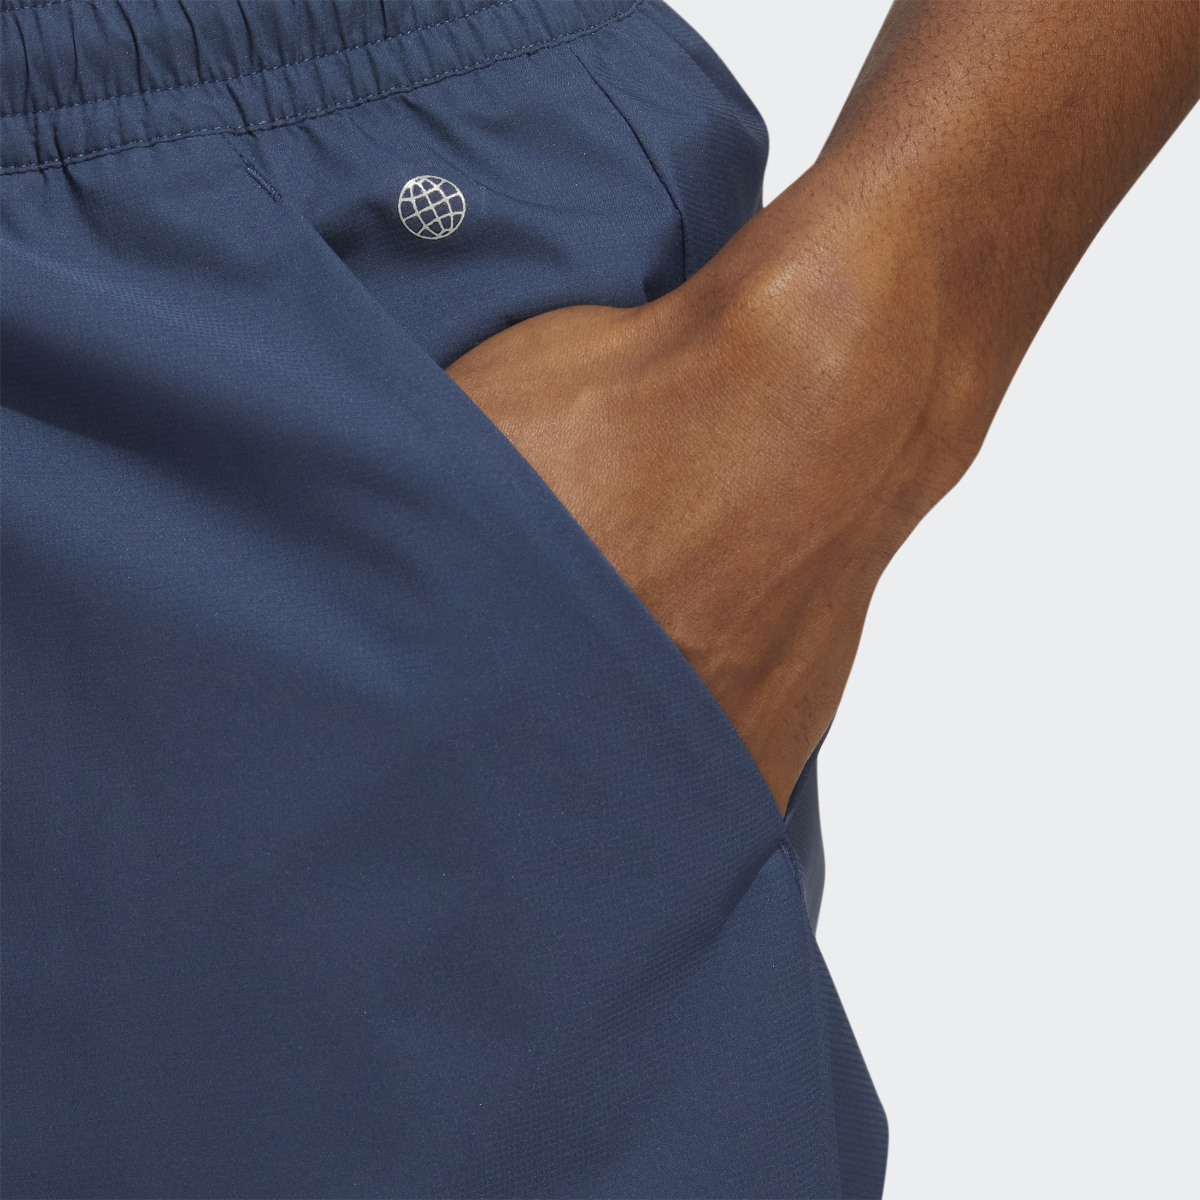 Adidas Provisional Golf Pants. 6